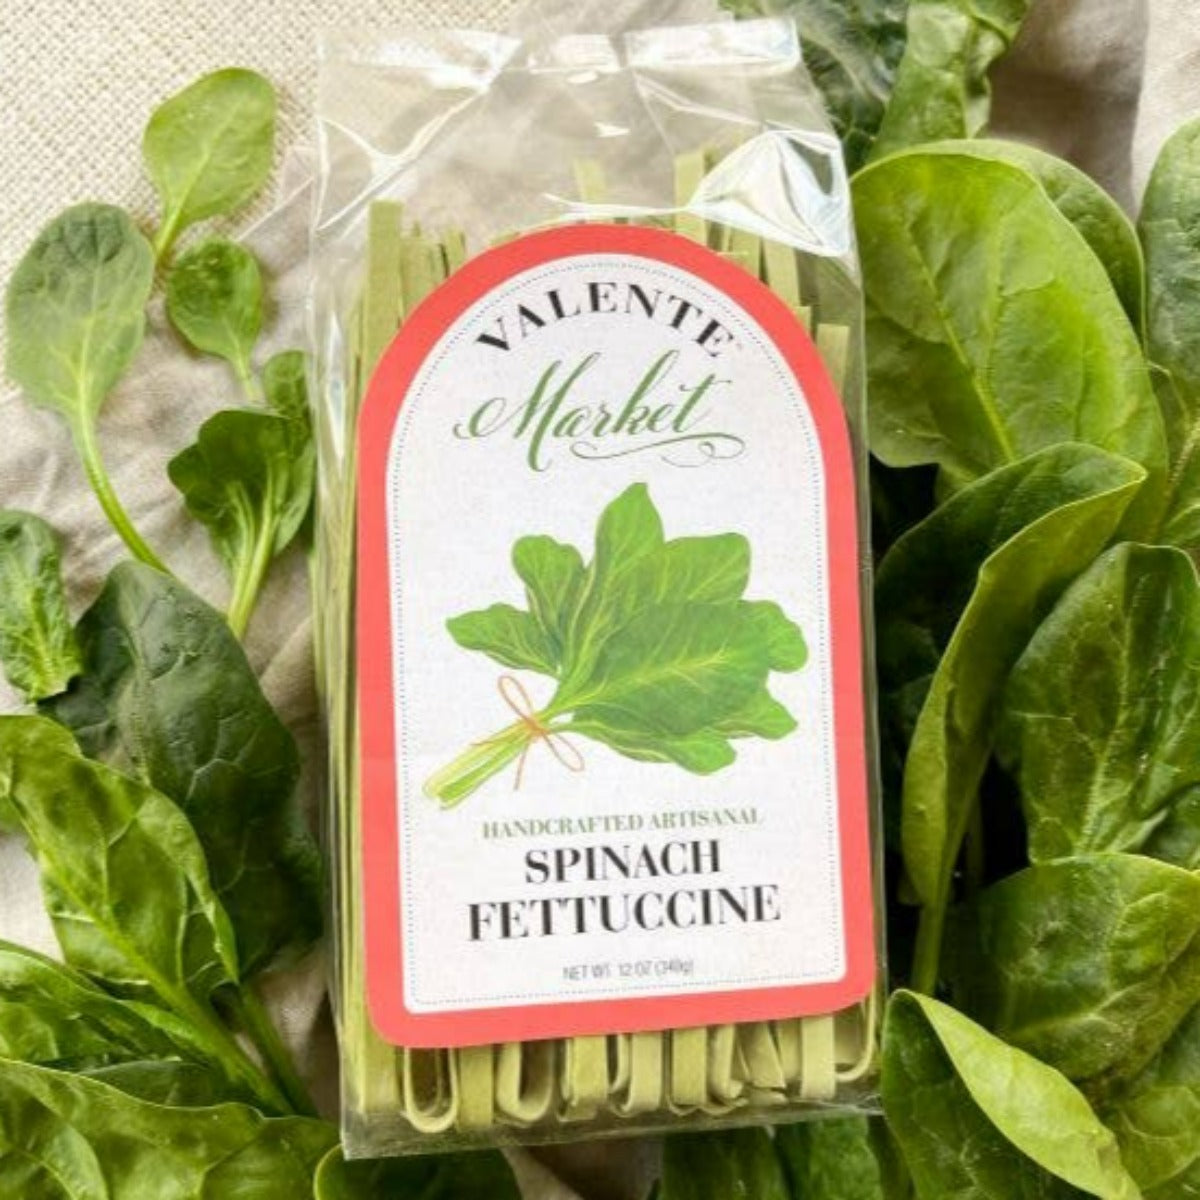 valente spinach fettucine, handcrafted, olive and basket